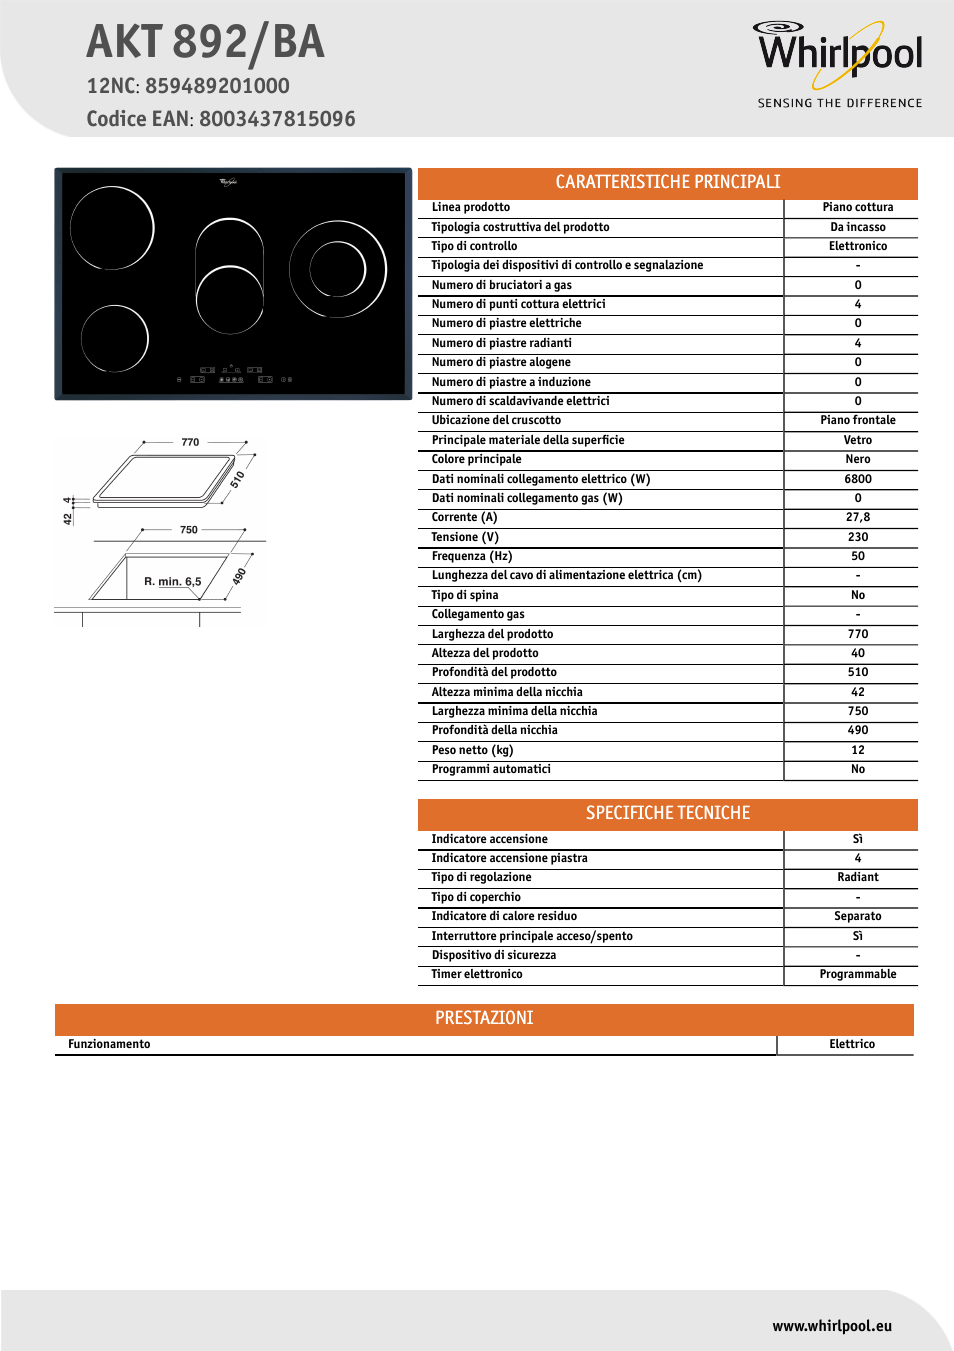 Whirlpool AKT 892-BA Manuale d'uso | Pagine: 1